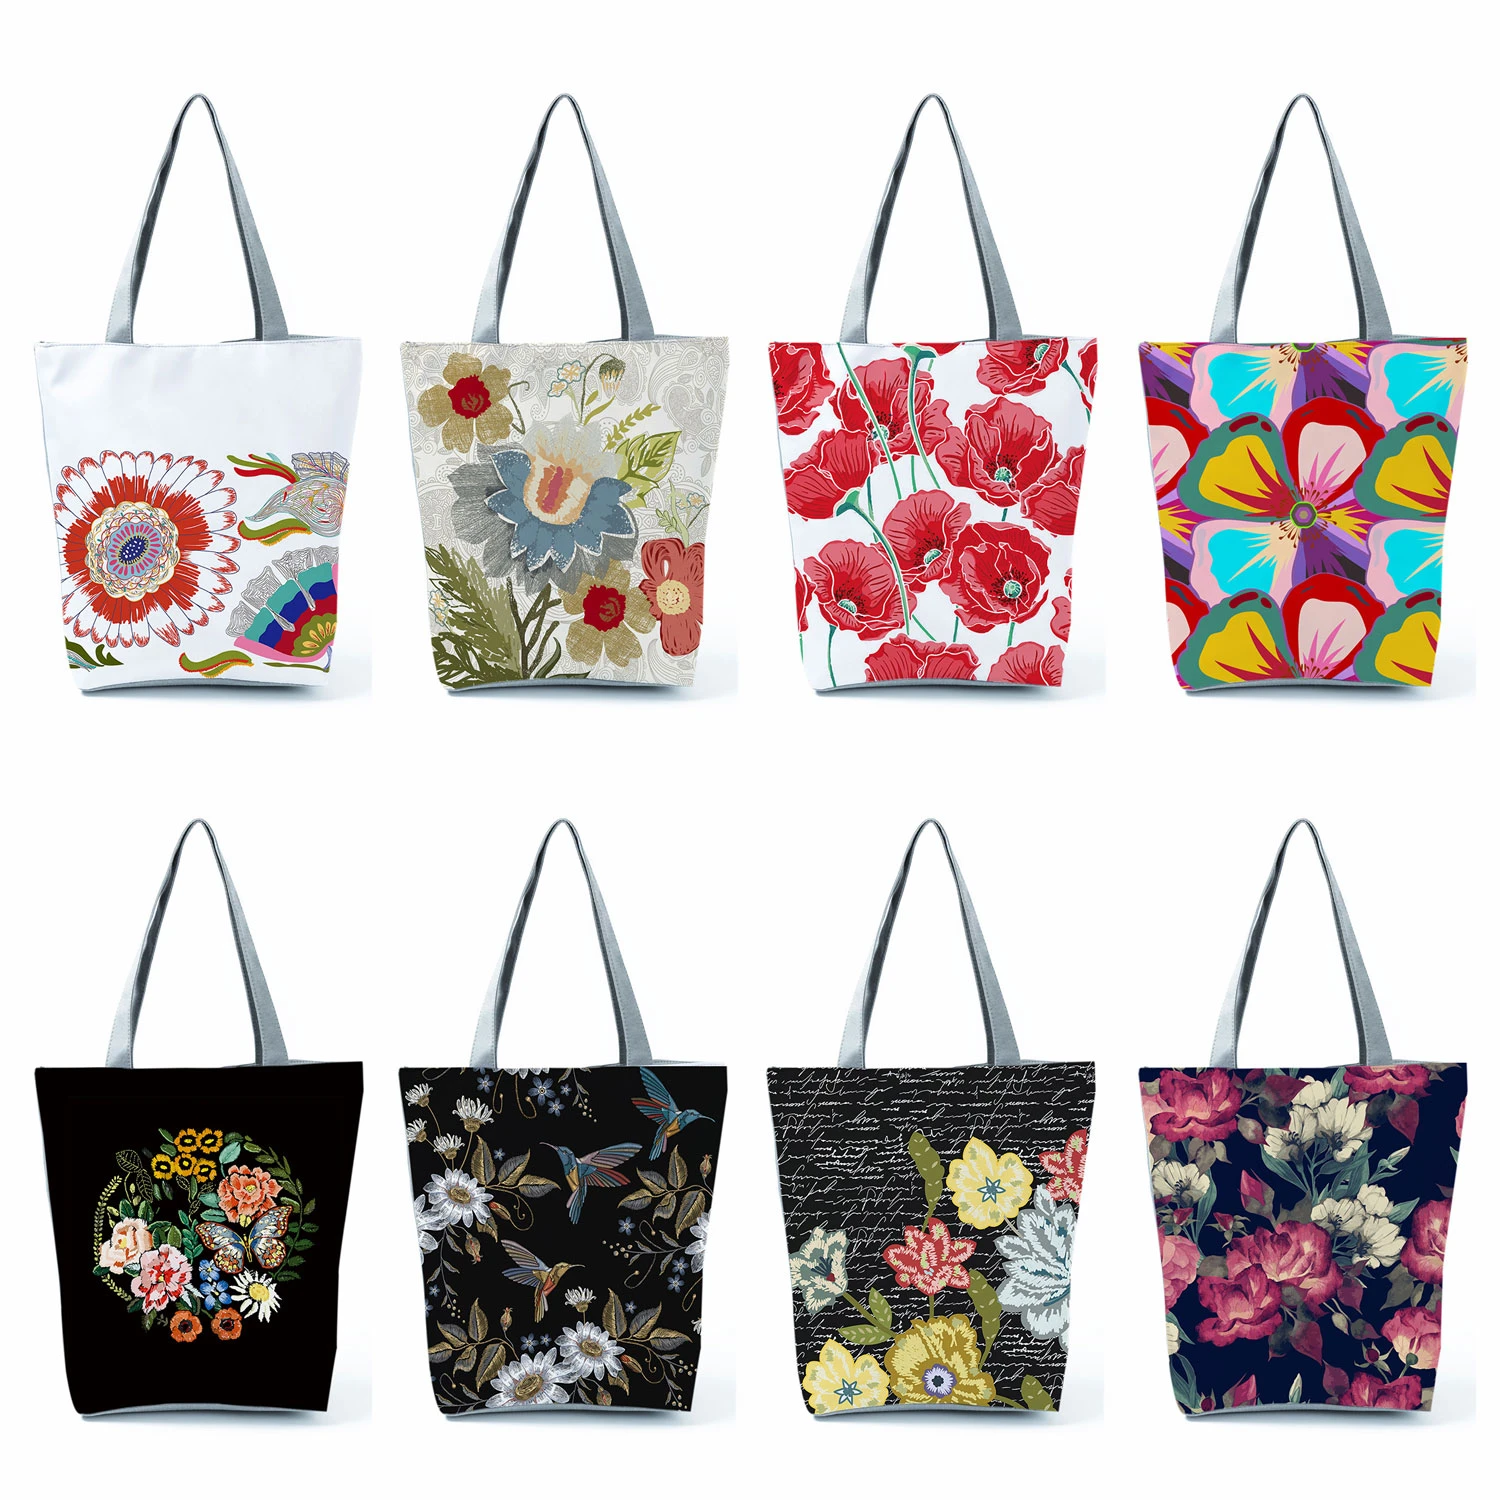 Customized Bright Colors Floral Print Tote Bag For Women Shoulder Bag Ladies Fashion Handbag Large Capacity Shopping Totes Bags